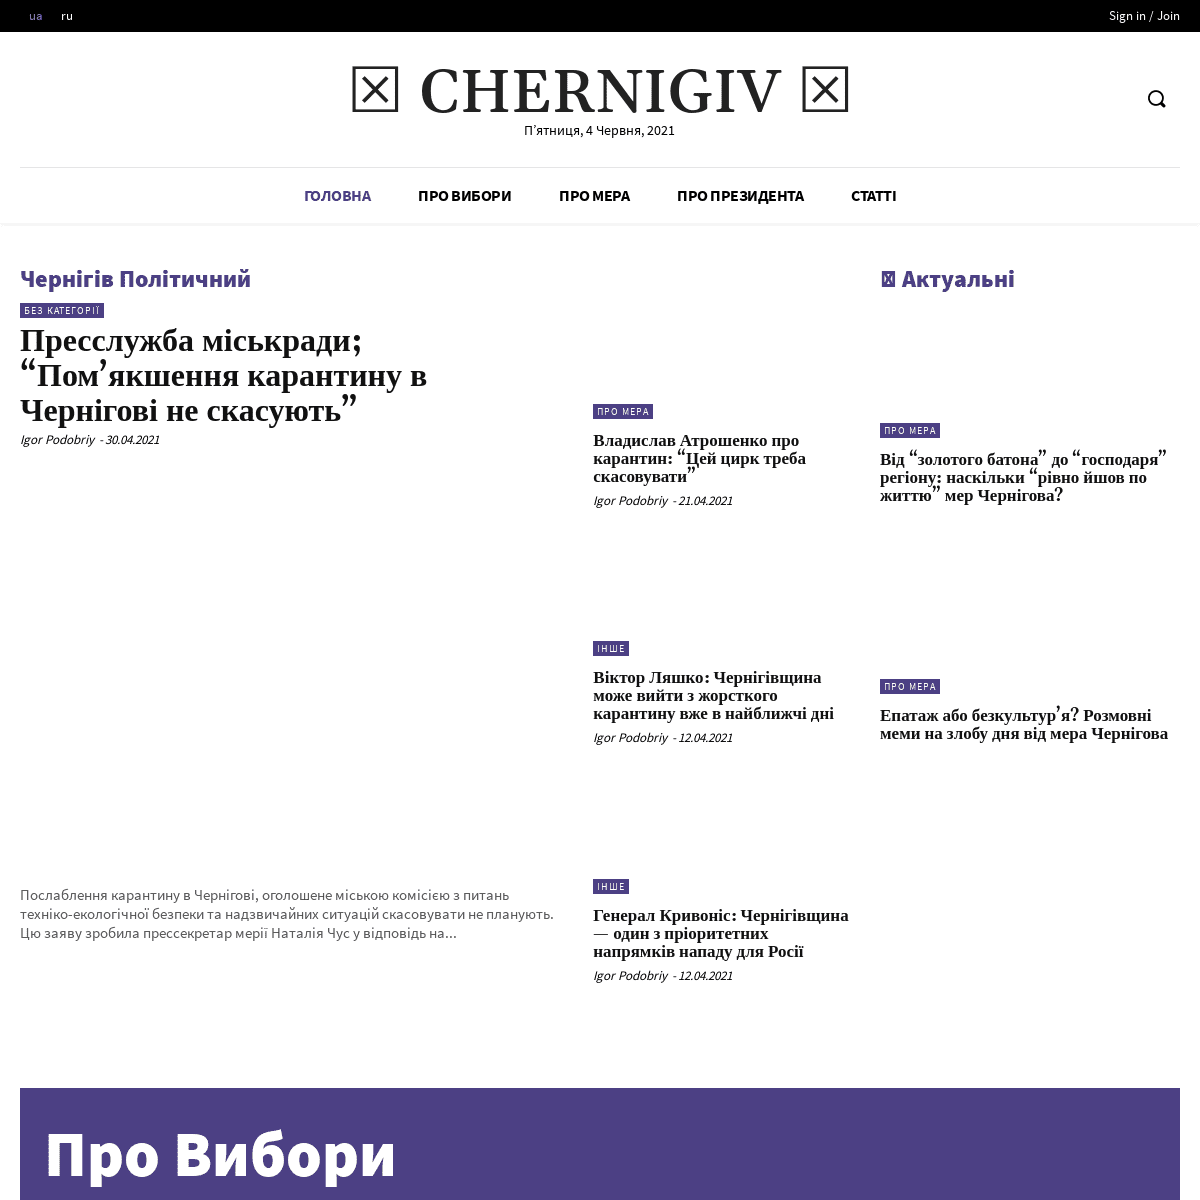 A complete backup of https://yes-chernigiv.com.ua